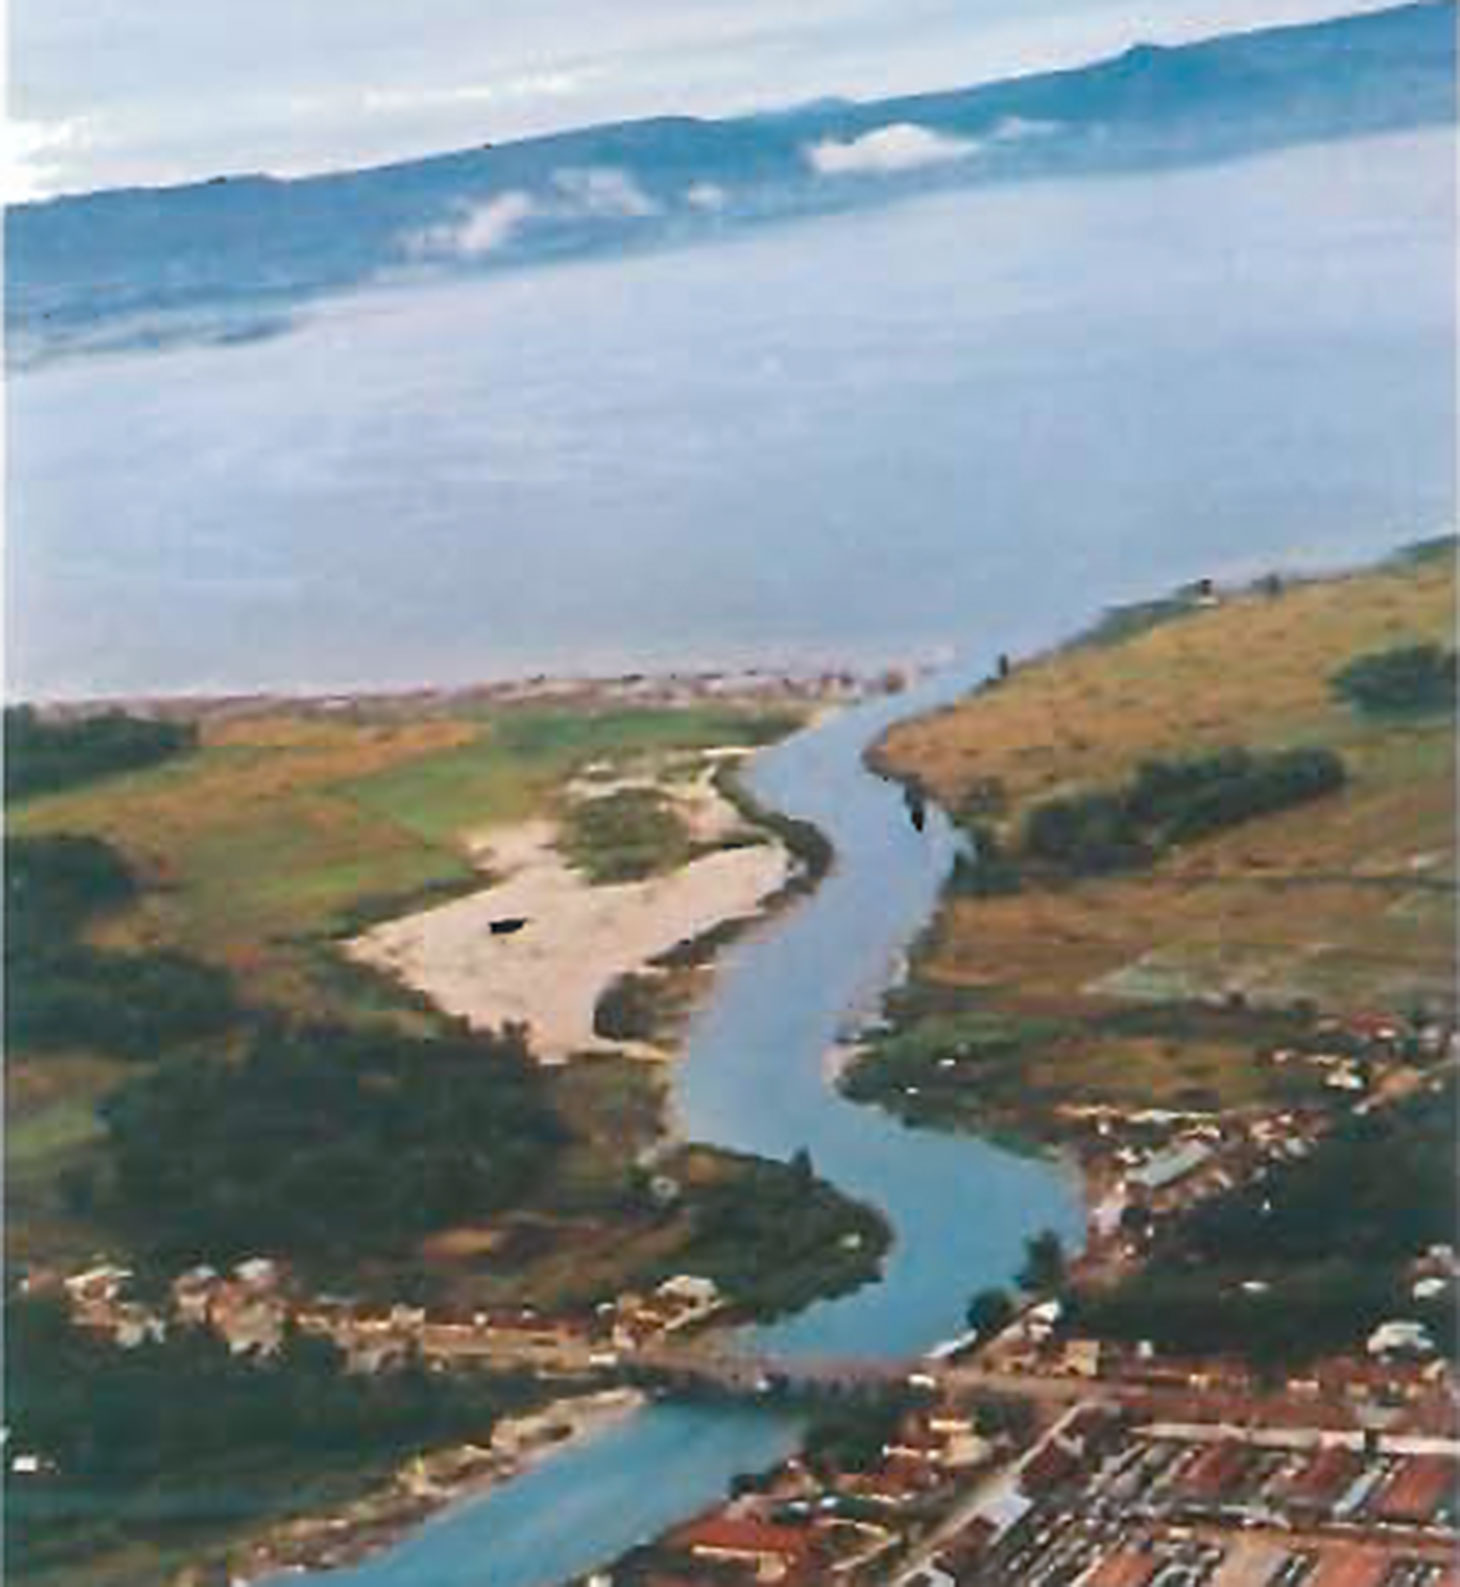 Photo 2: Outlet of Lake Toba to the Asahan River